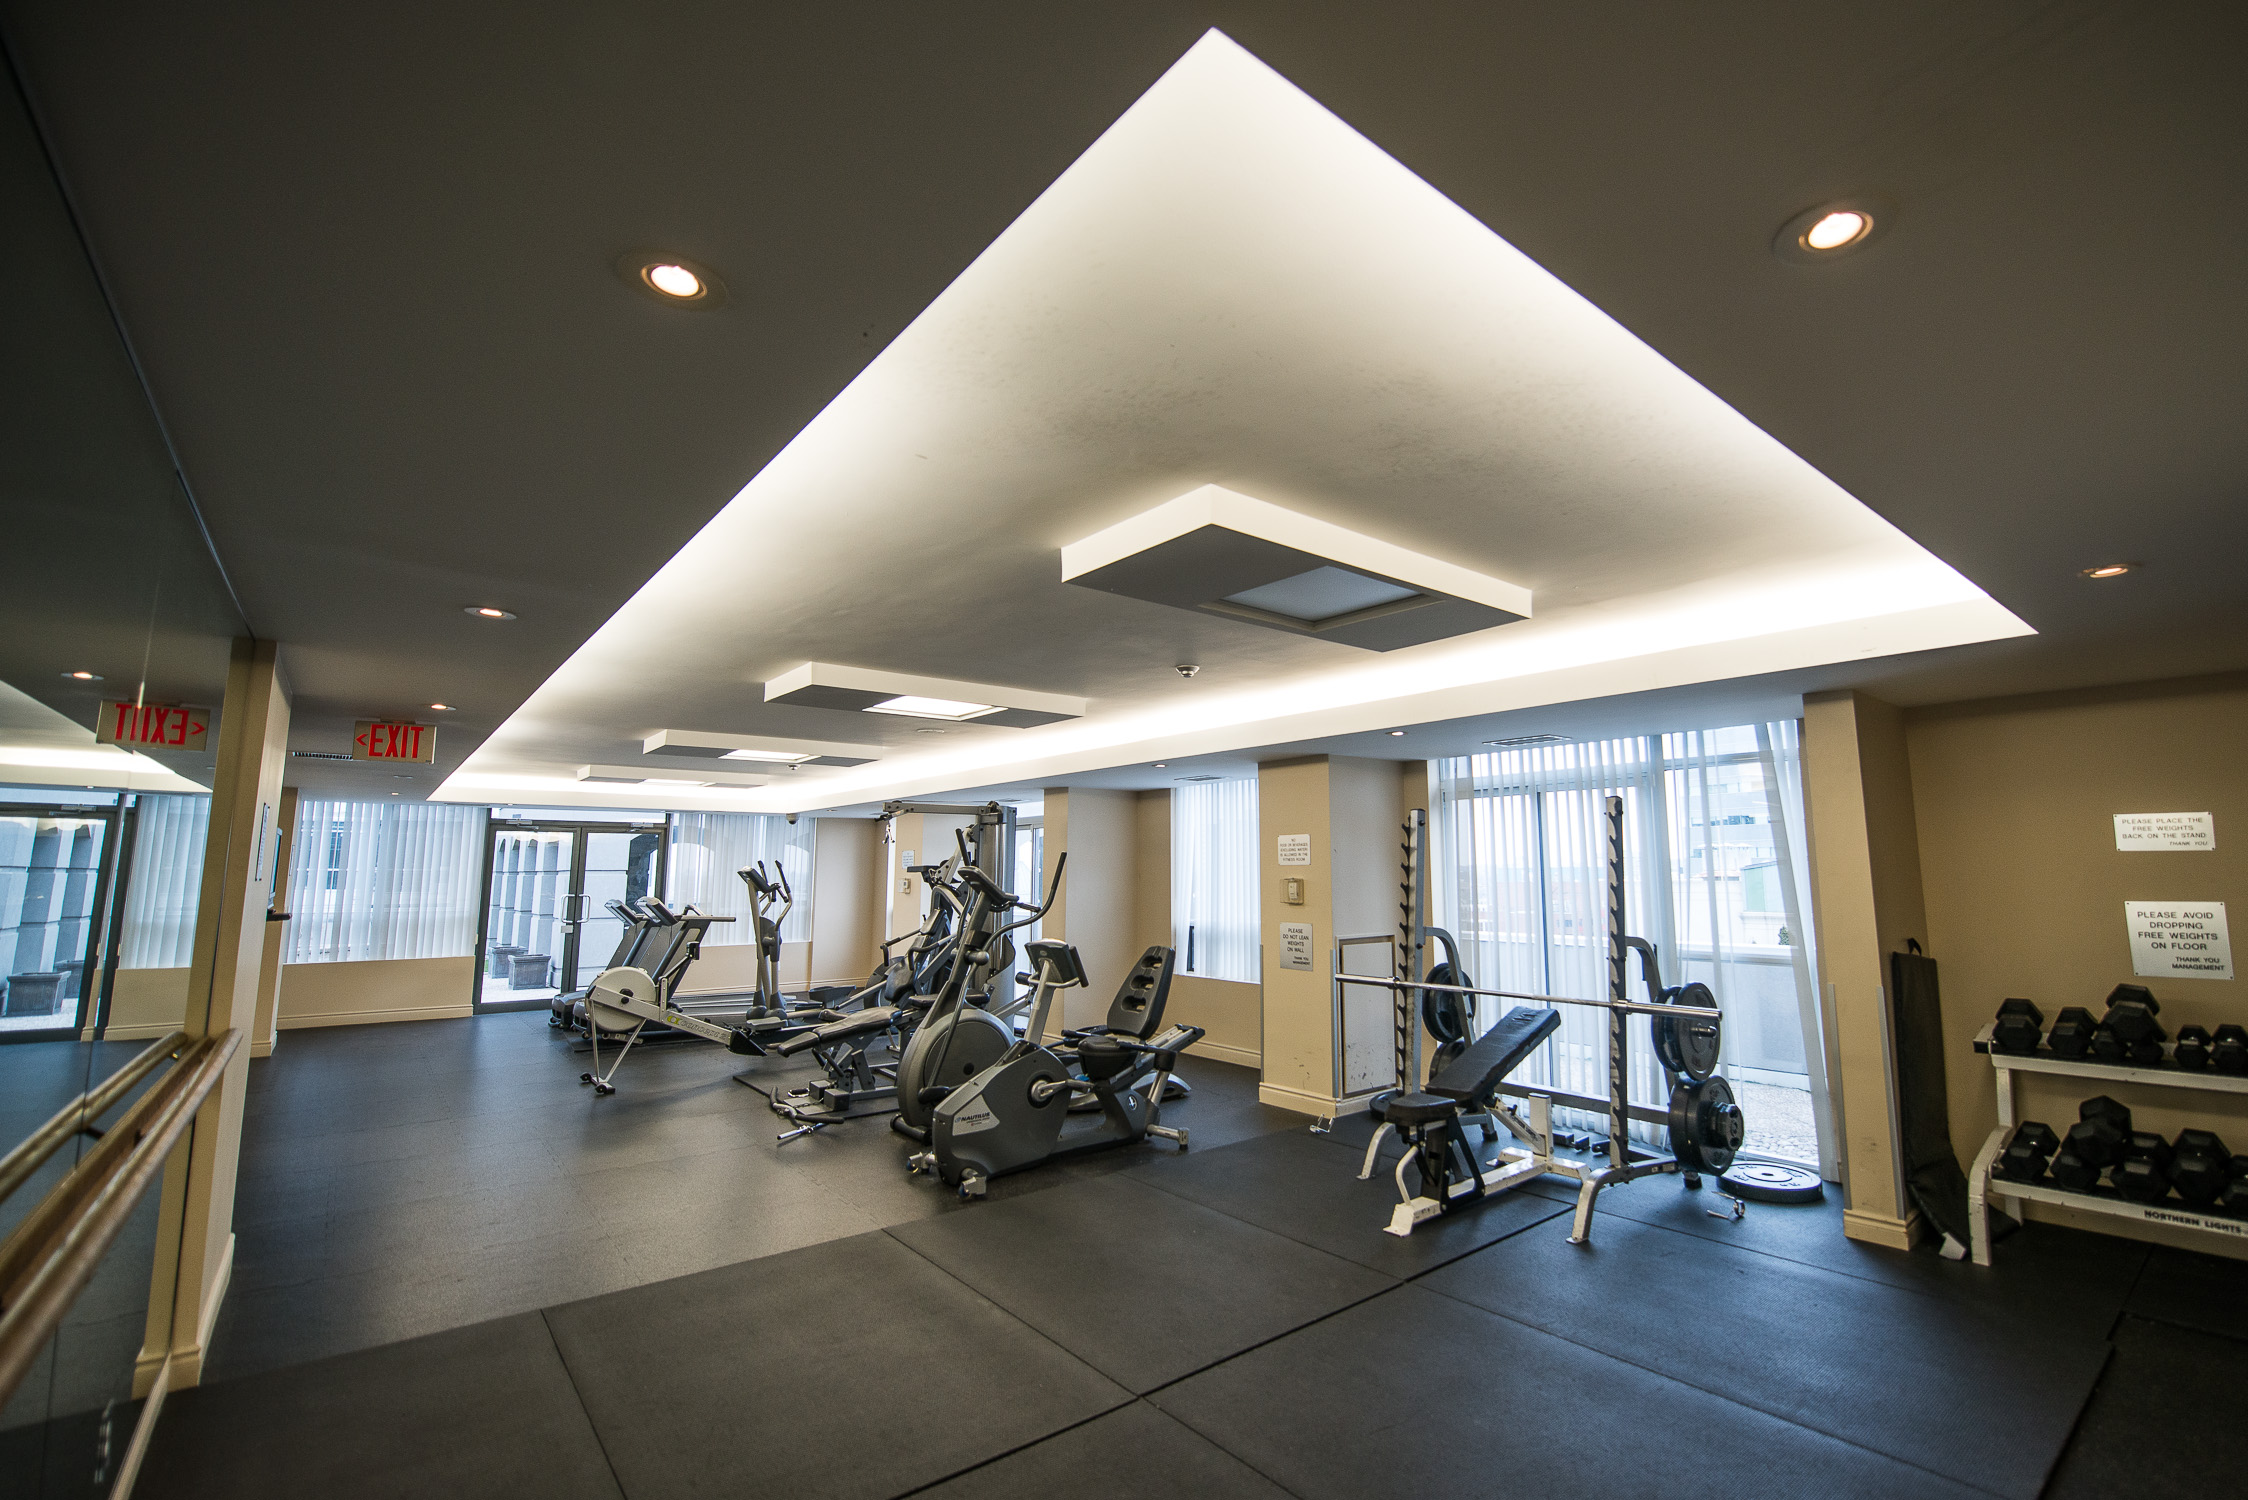 executive rentals toronto fitness centre in university plaza 17th floor